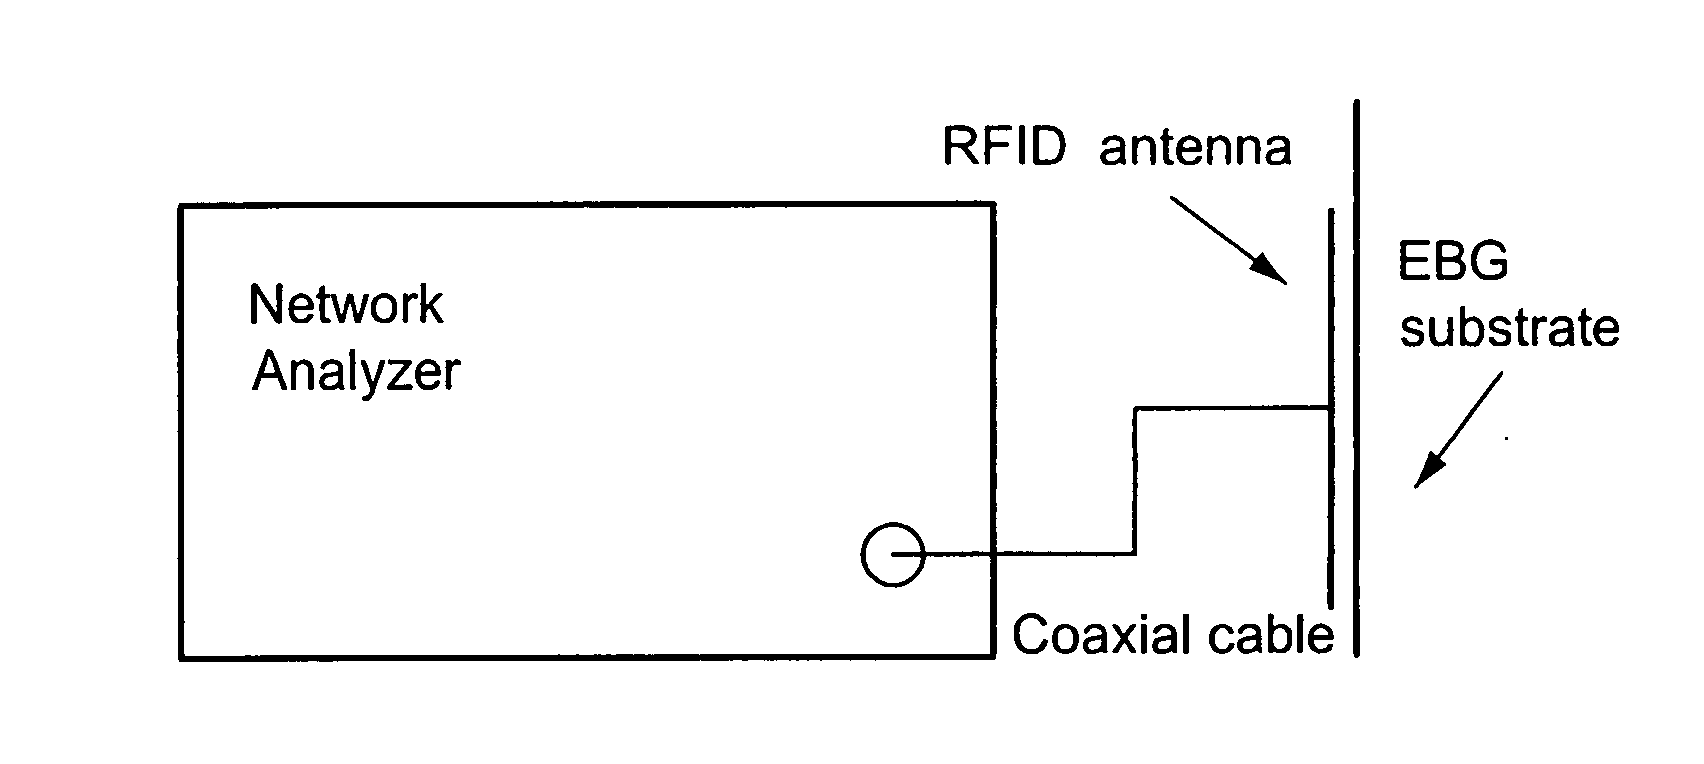 RFID tag and antenna